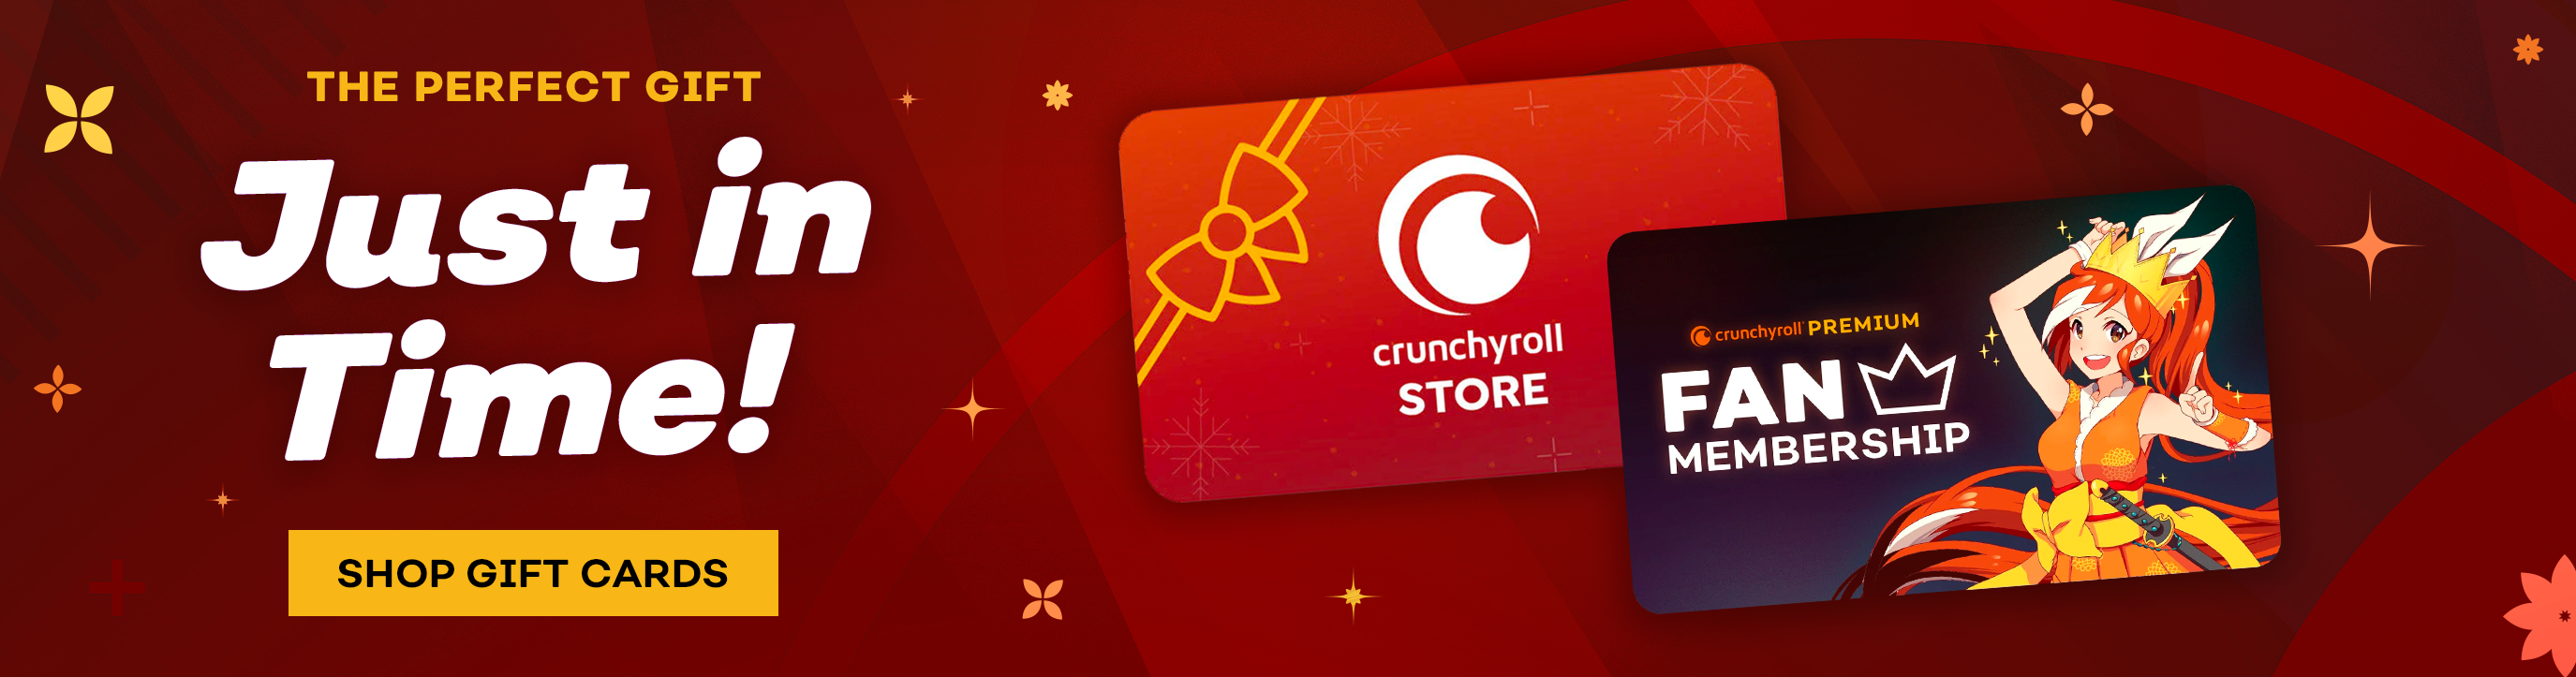  Premium Streaming Memberships and Crunchyroll Store Gift Cards